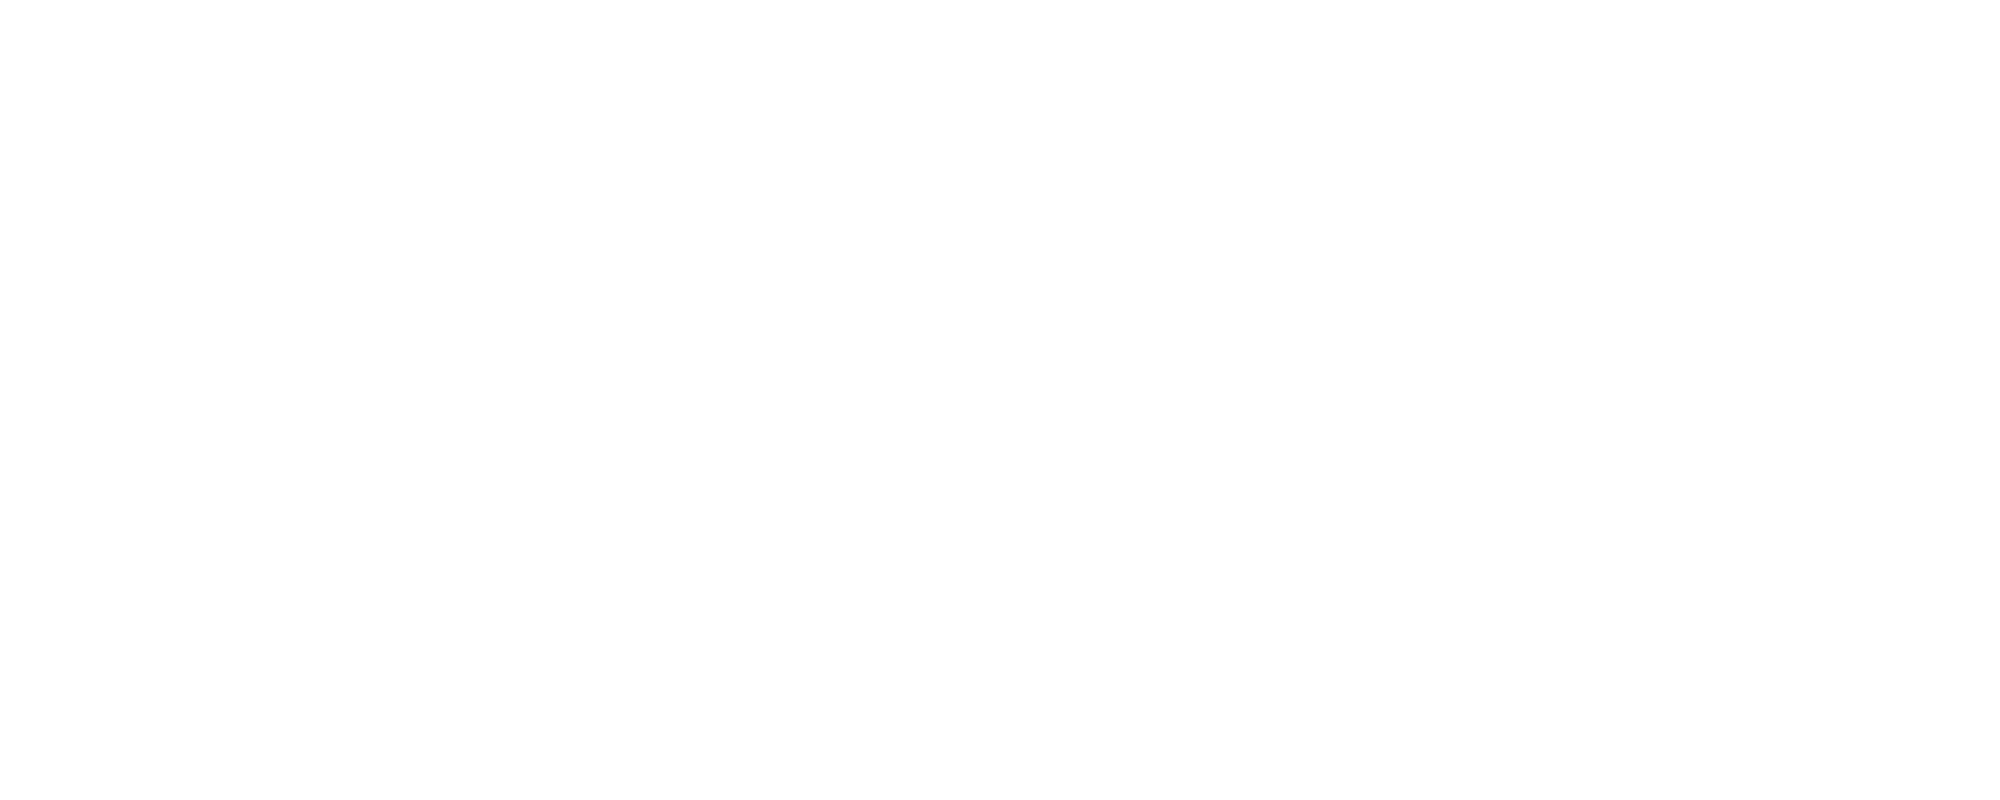 Tidy Texas Home Organizer